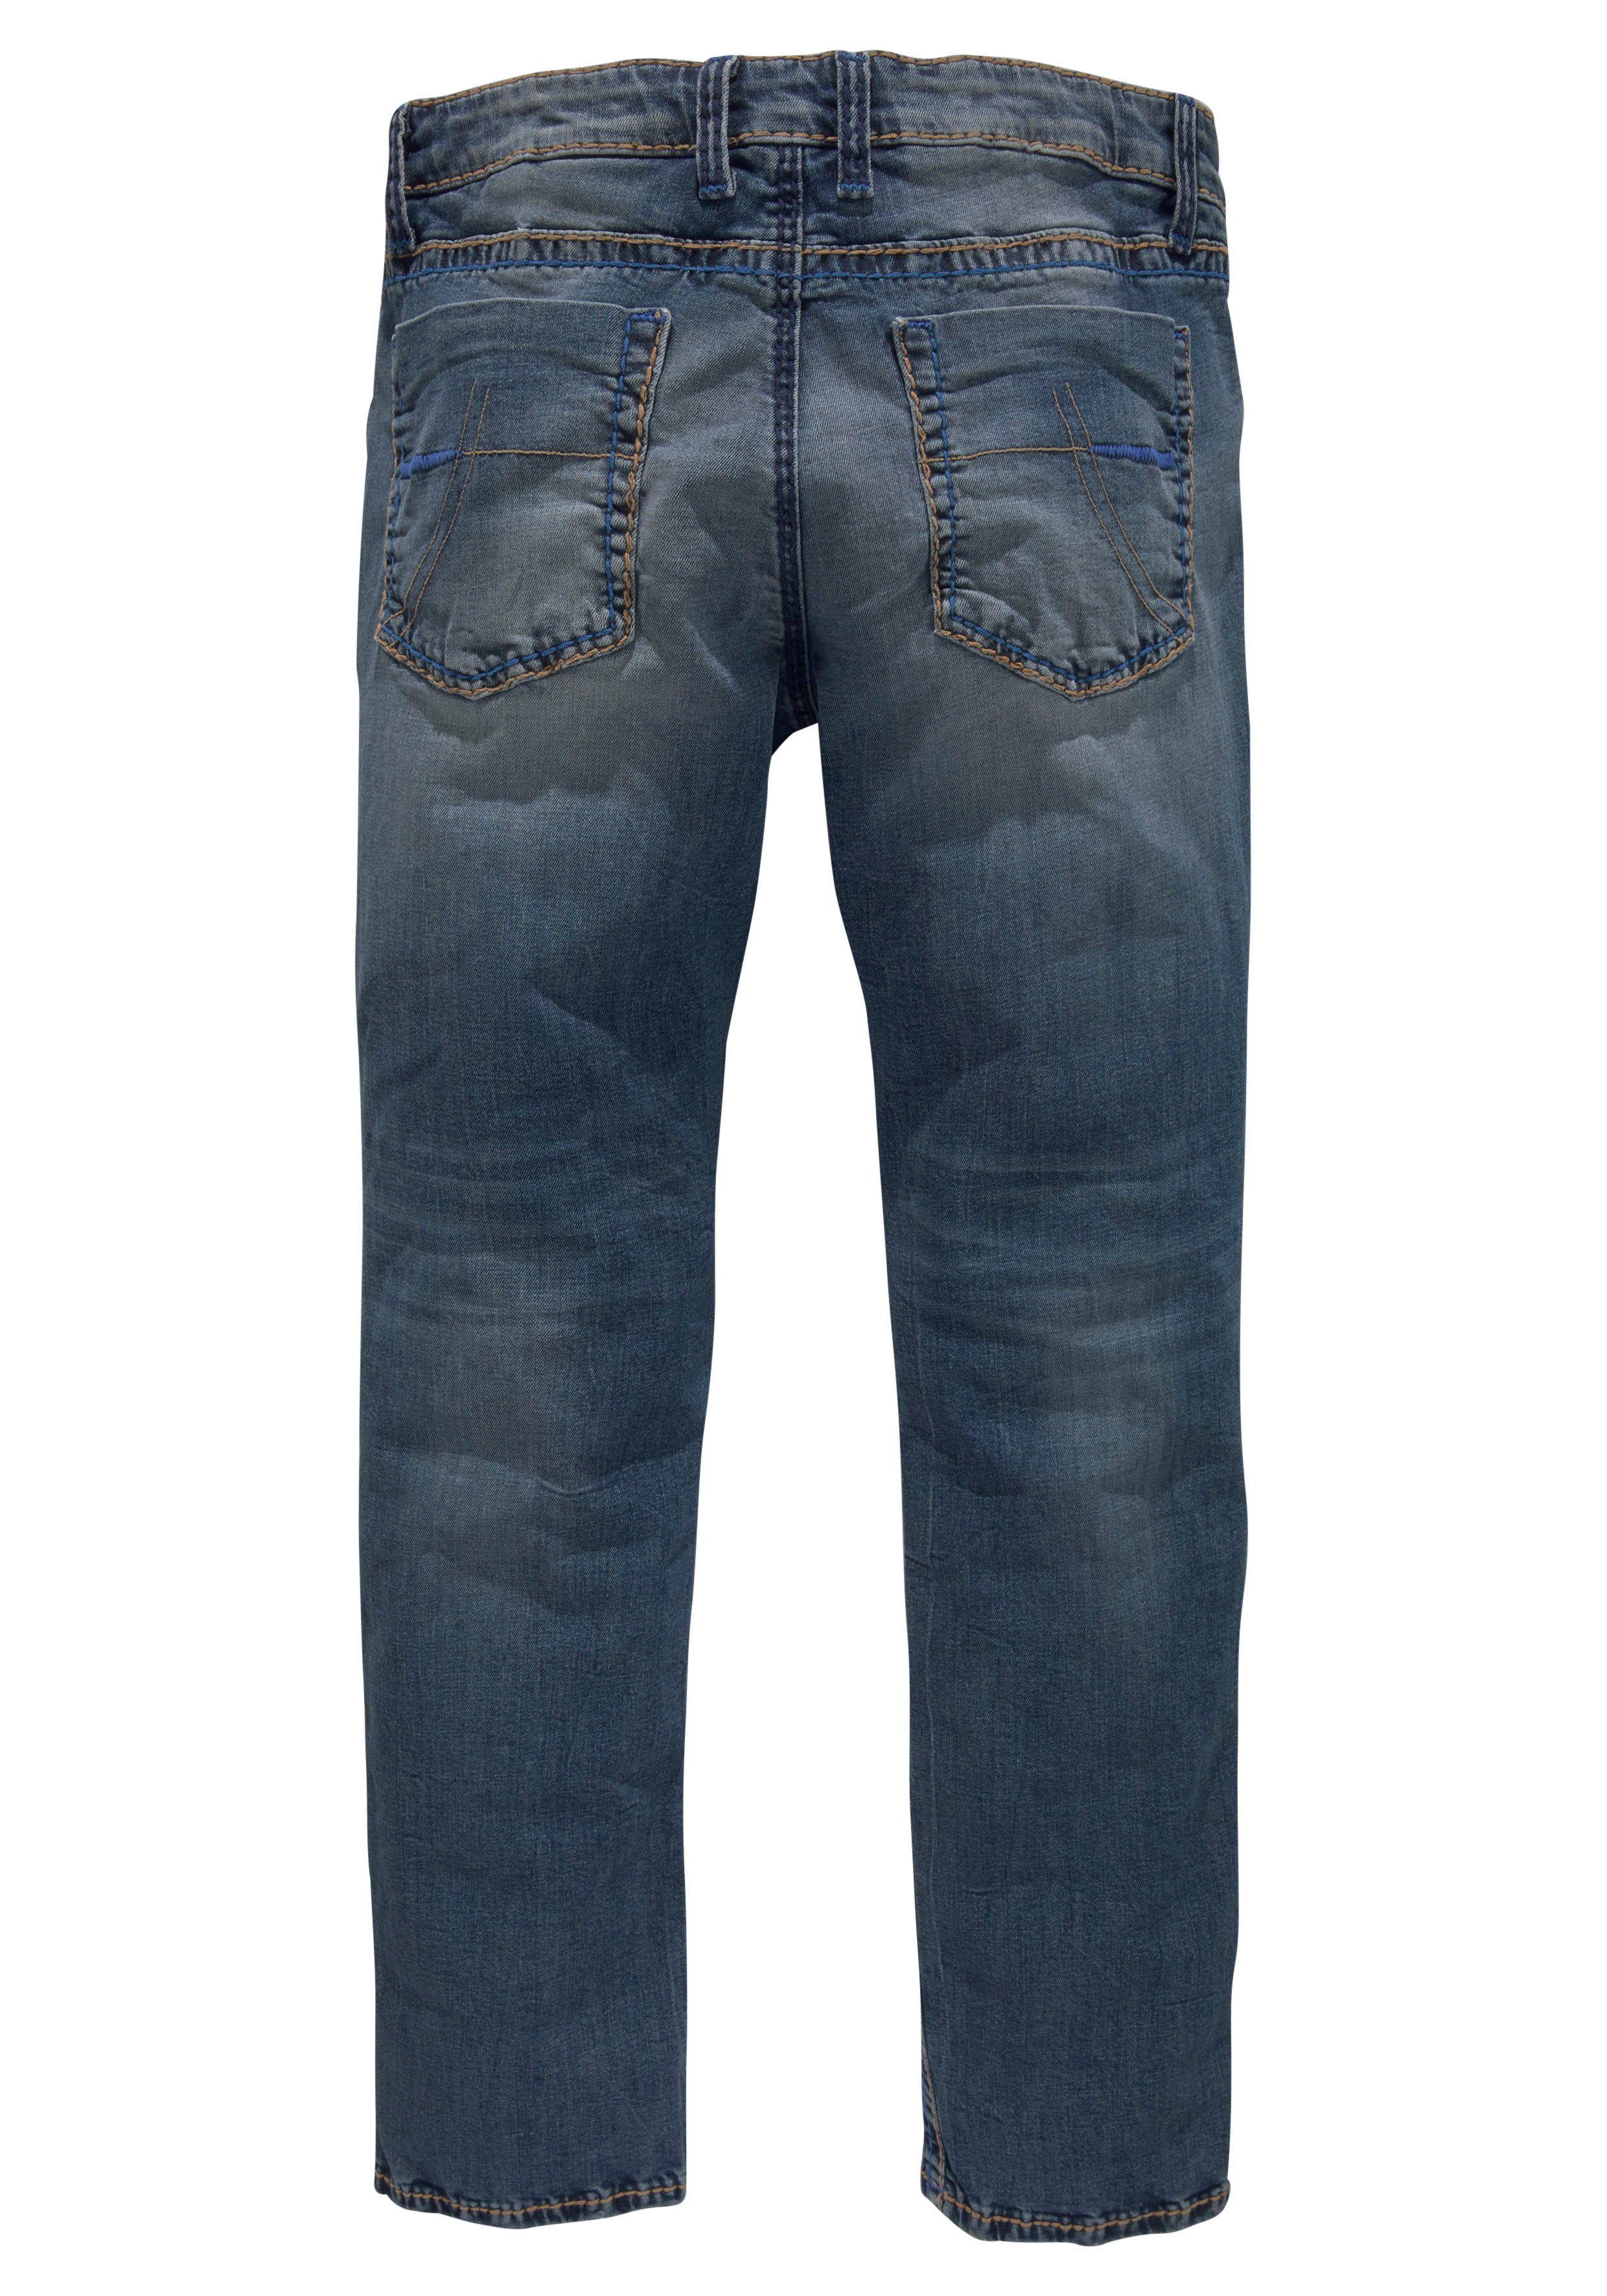 Straight-Jeans Steppnähten dark-used-vintage markanten mit NI:CO:R611 DAVID CAMP